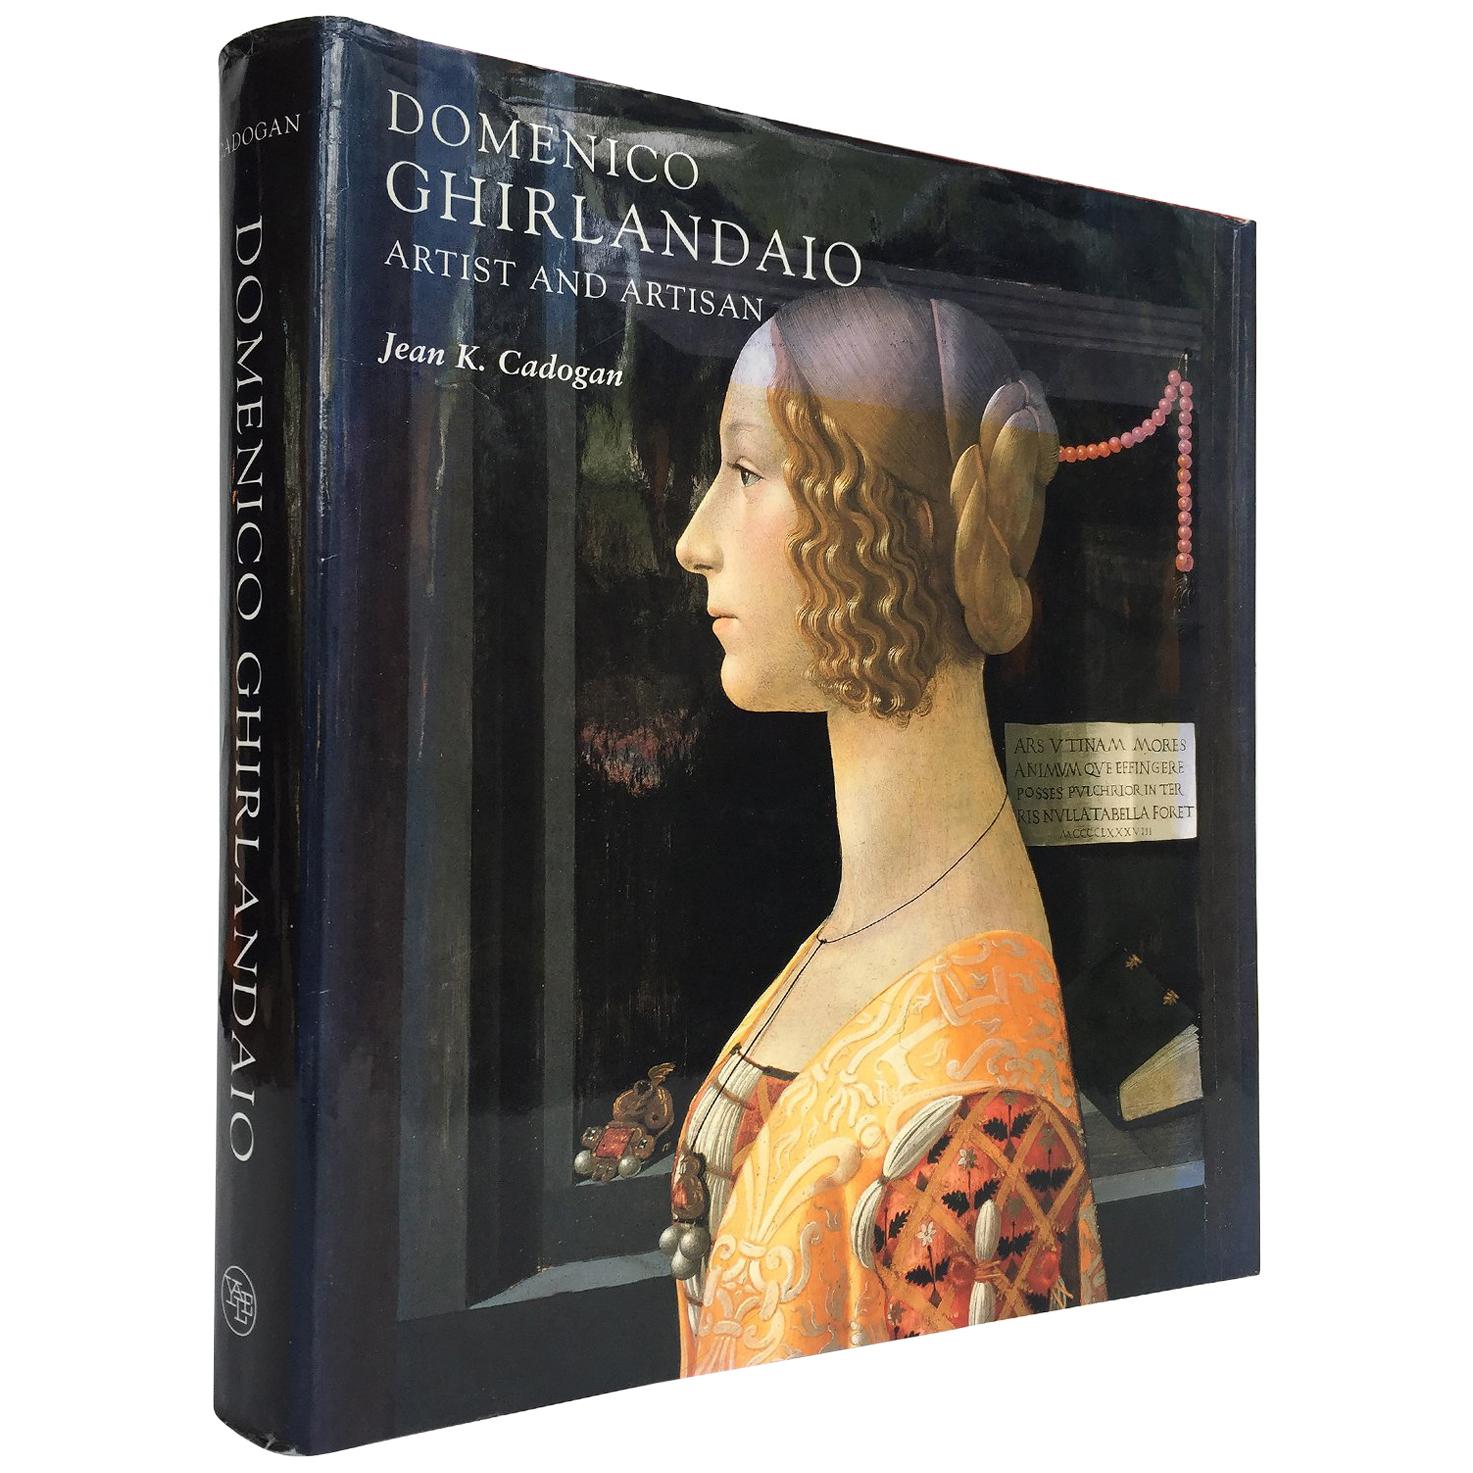 Art Book "Domenico Ghirlandaio: Artist and Artisan" by Joan K. Cadogan